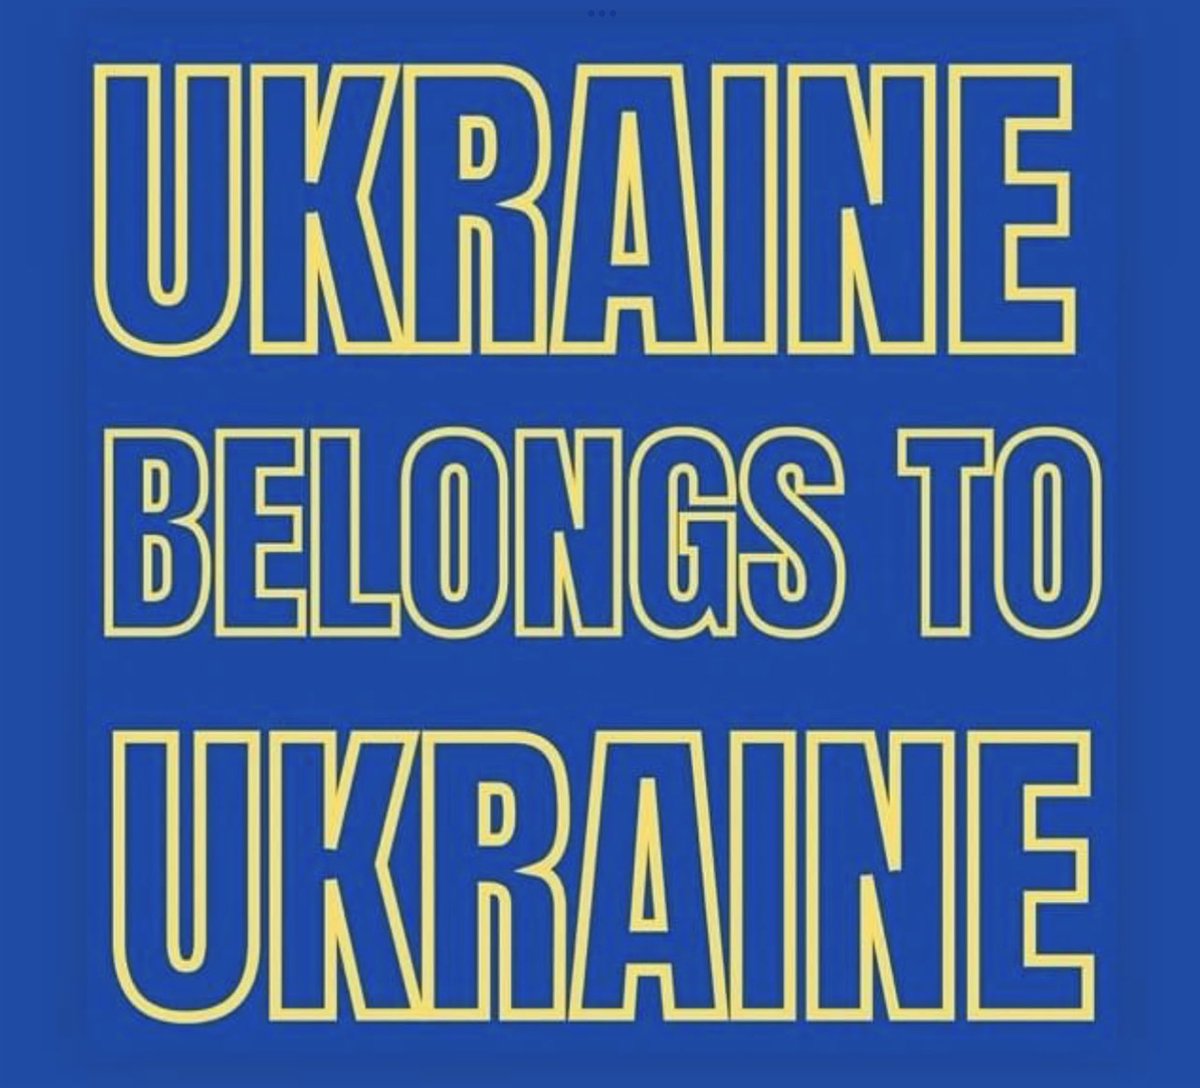 Your daily reminder that Ukraine belongs to Ukraine. #StandWithUkraine